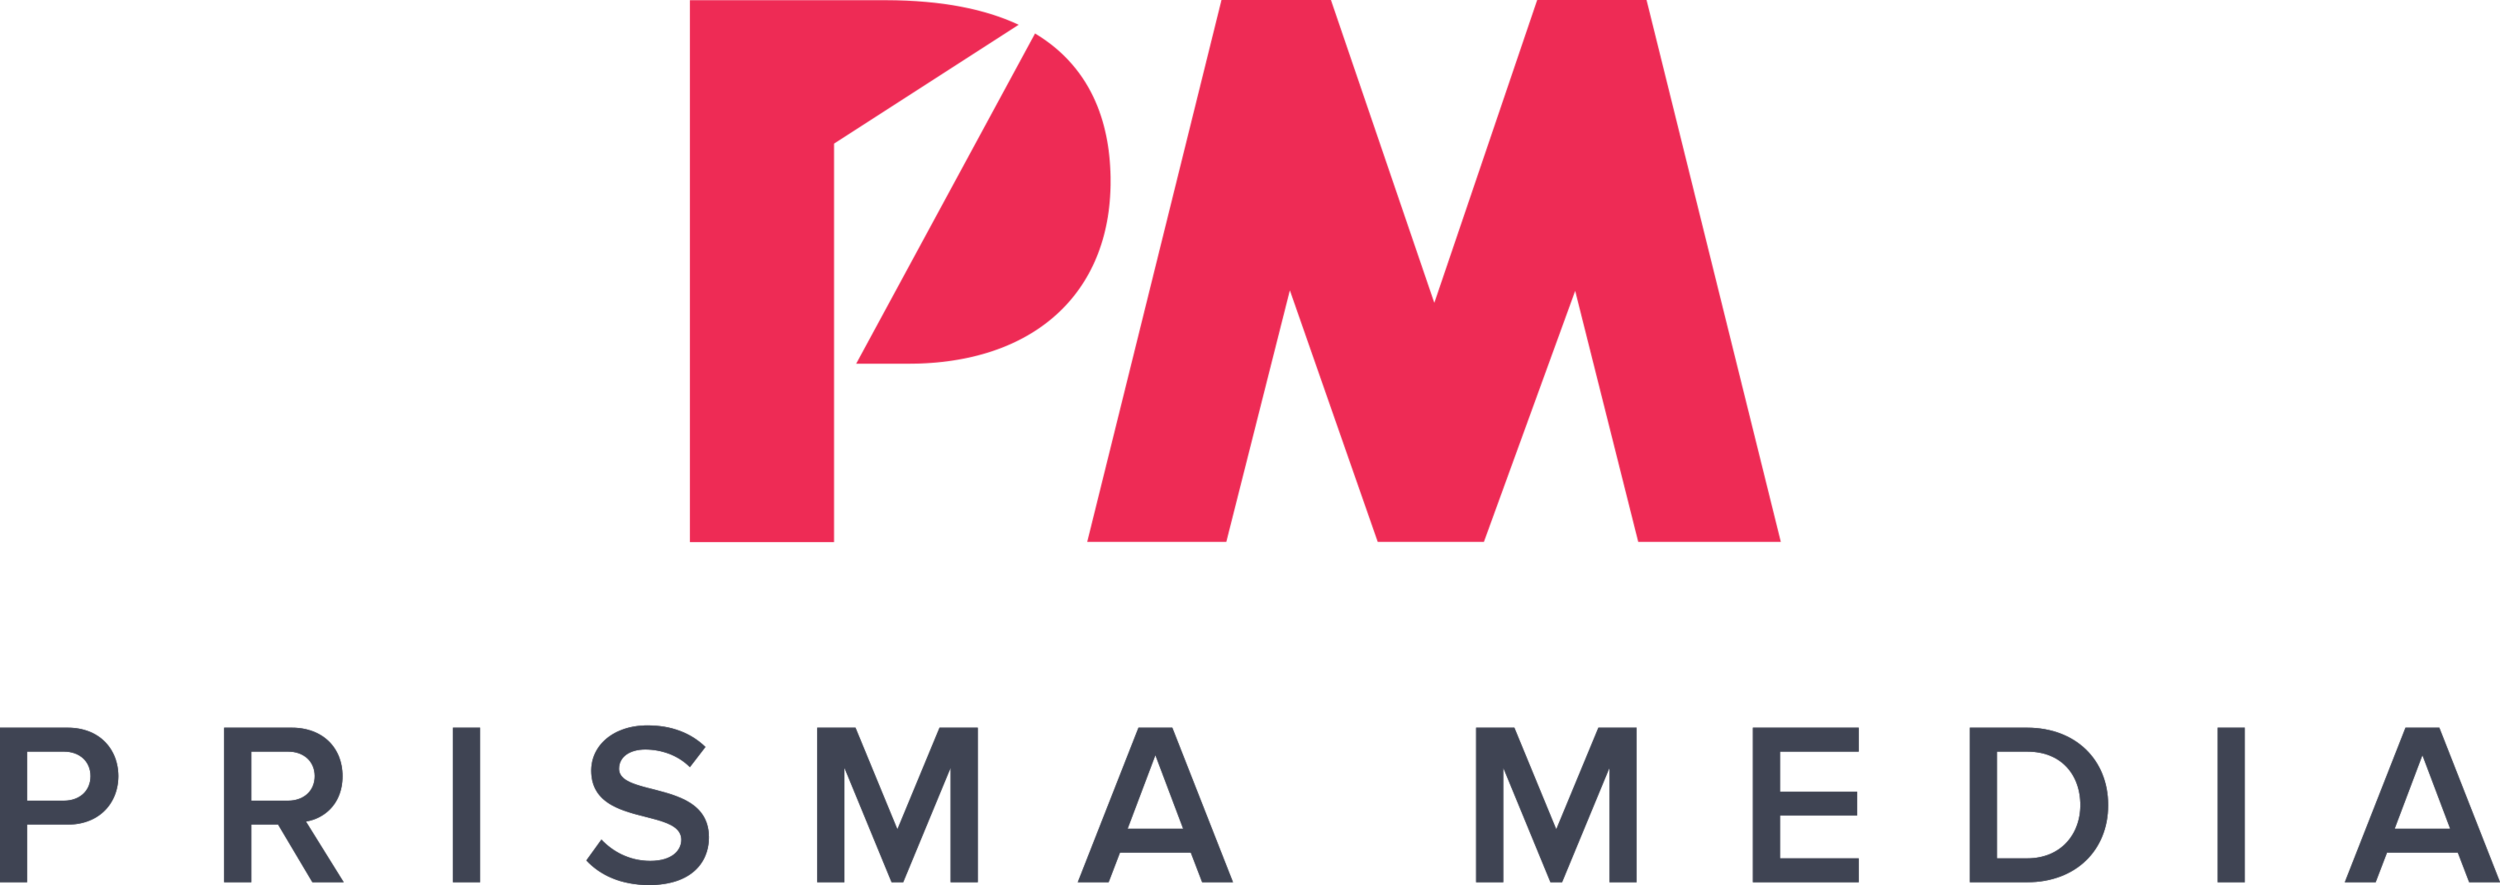 logo_prisma_v1.png